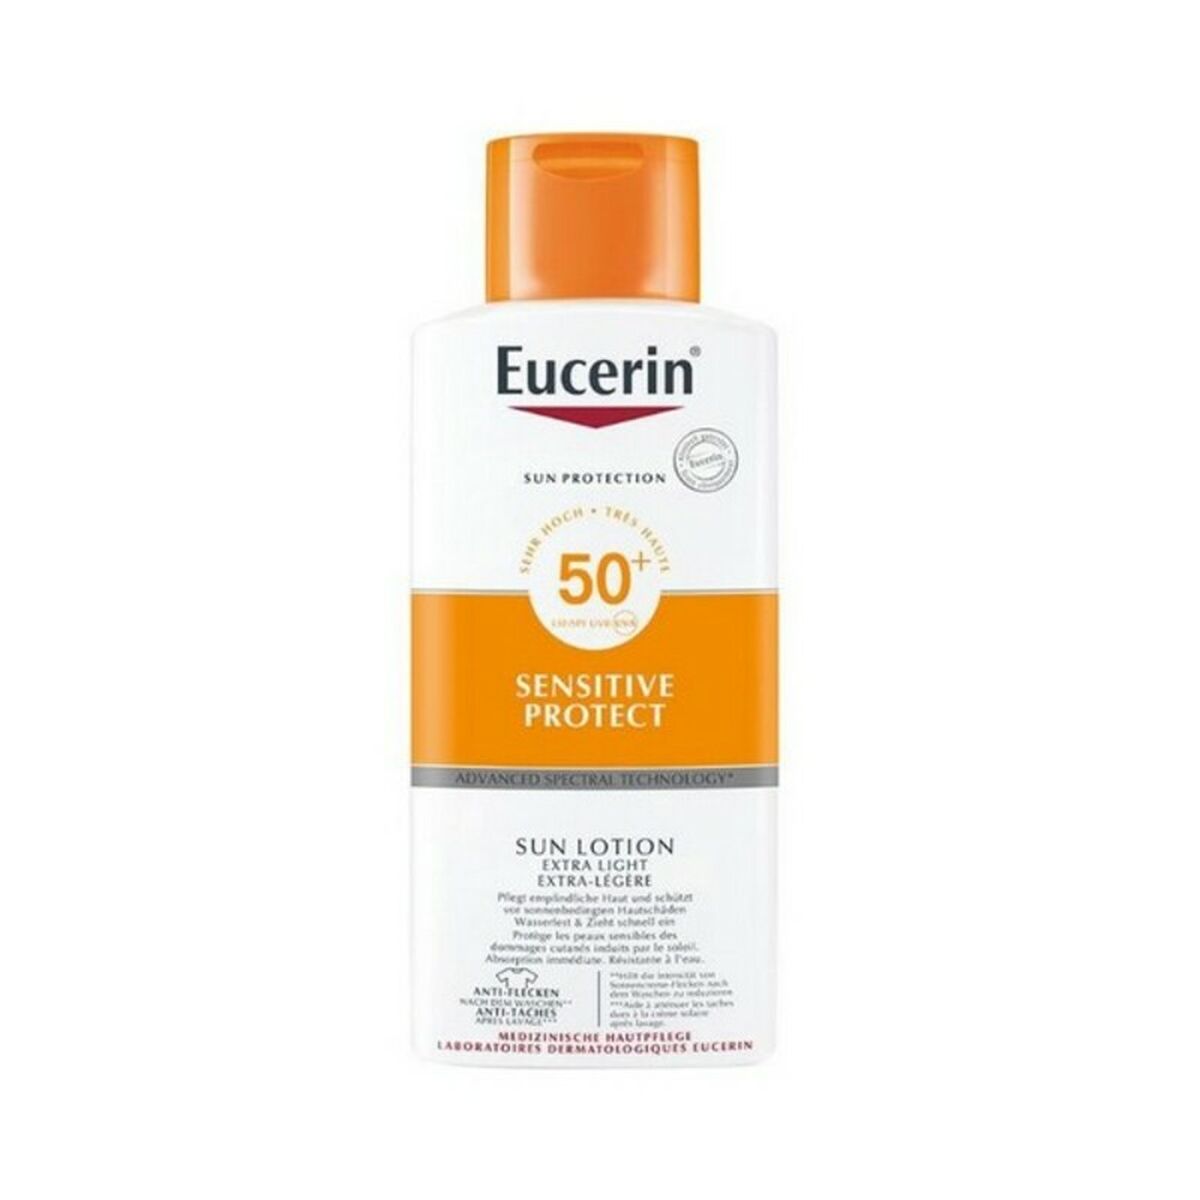 Sun Lotion Sensitive Protect Eucerin Spf 50-1